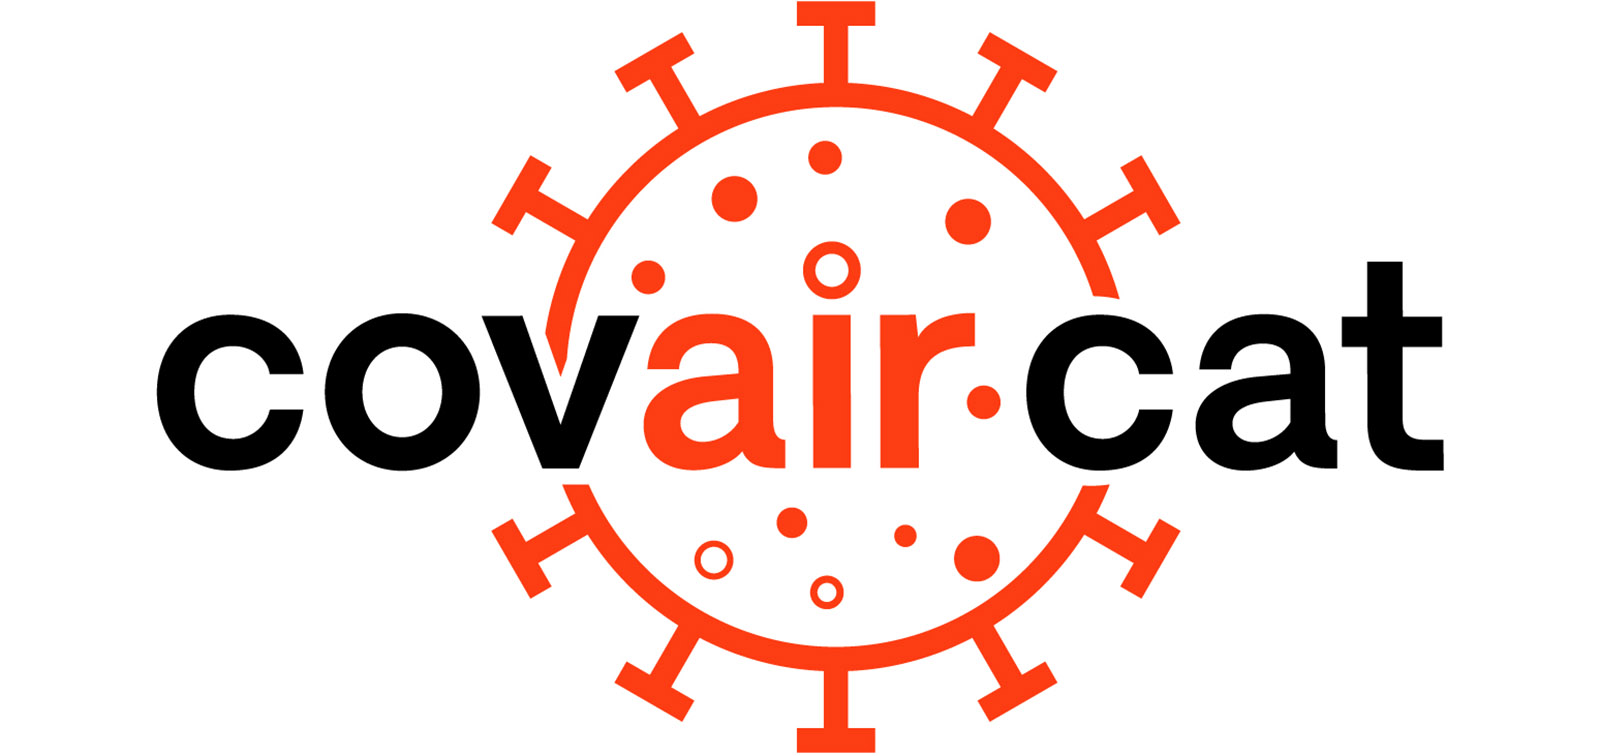 COVAIR-CAT project logo